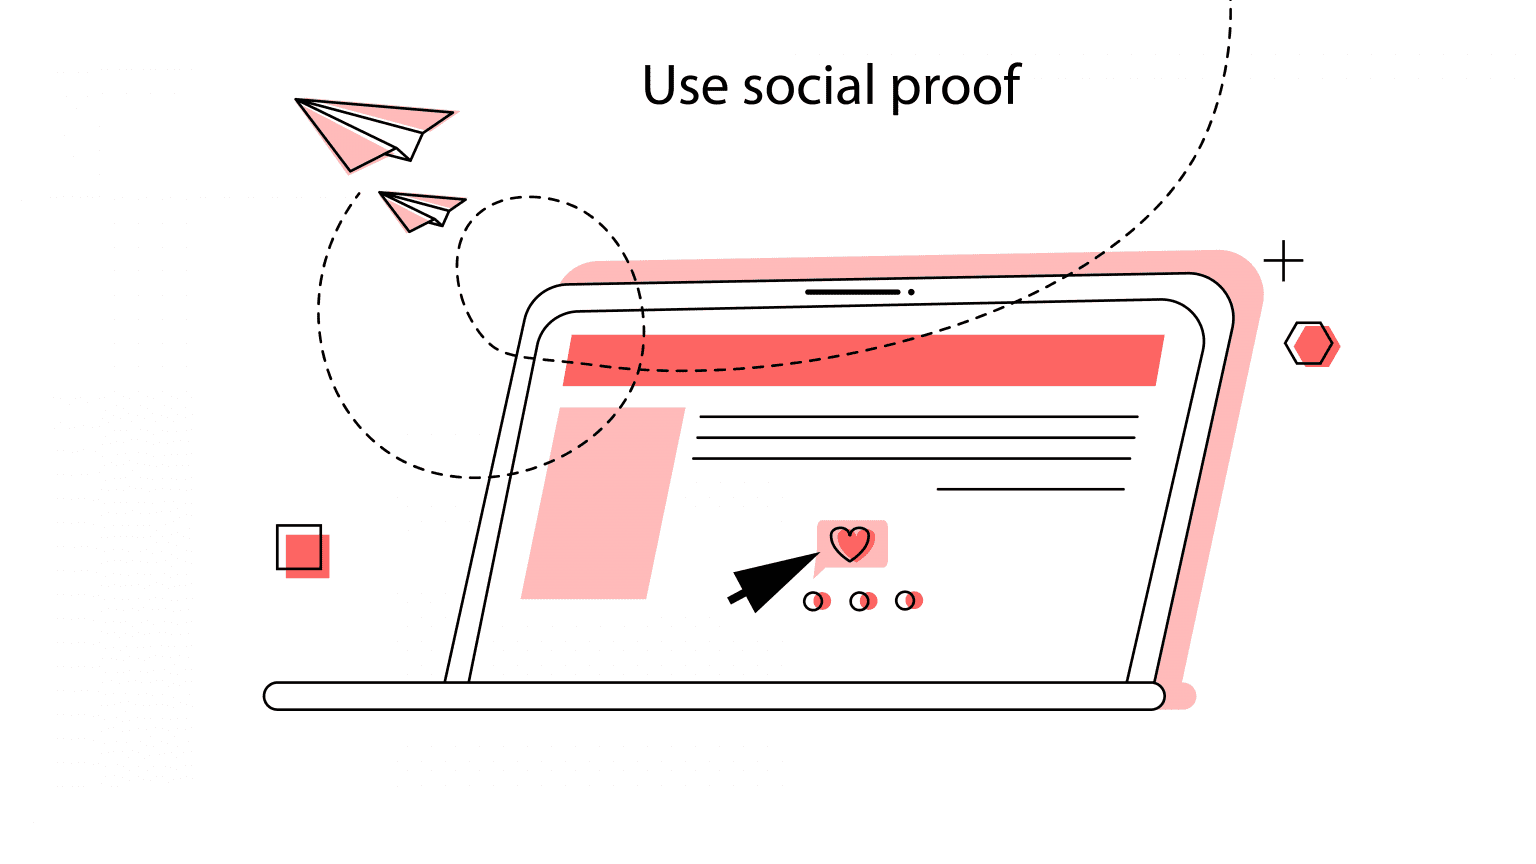 social proofs will make a web design improvement